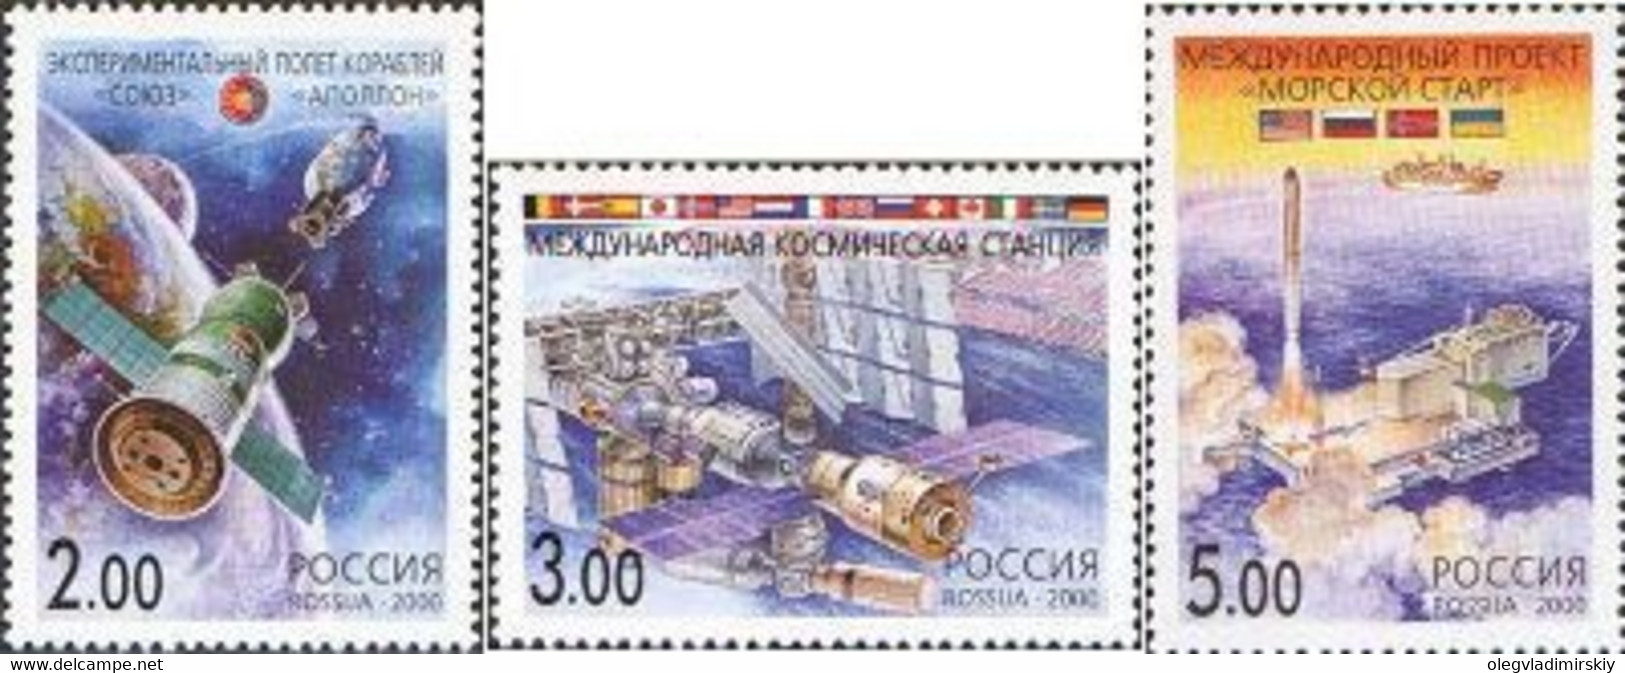 Russia 2000 Cosmonautics Day Set Of 3 Stamps - USA